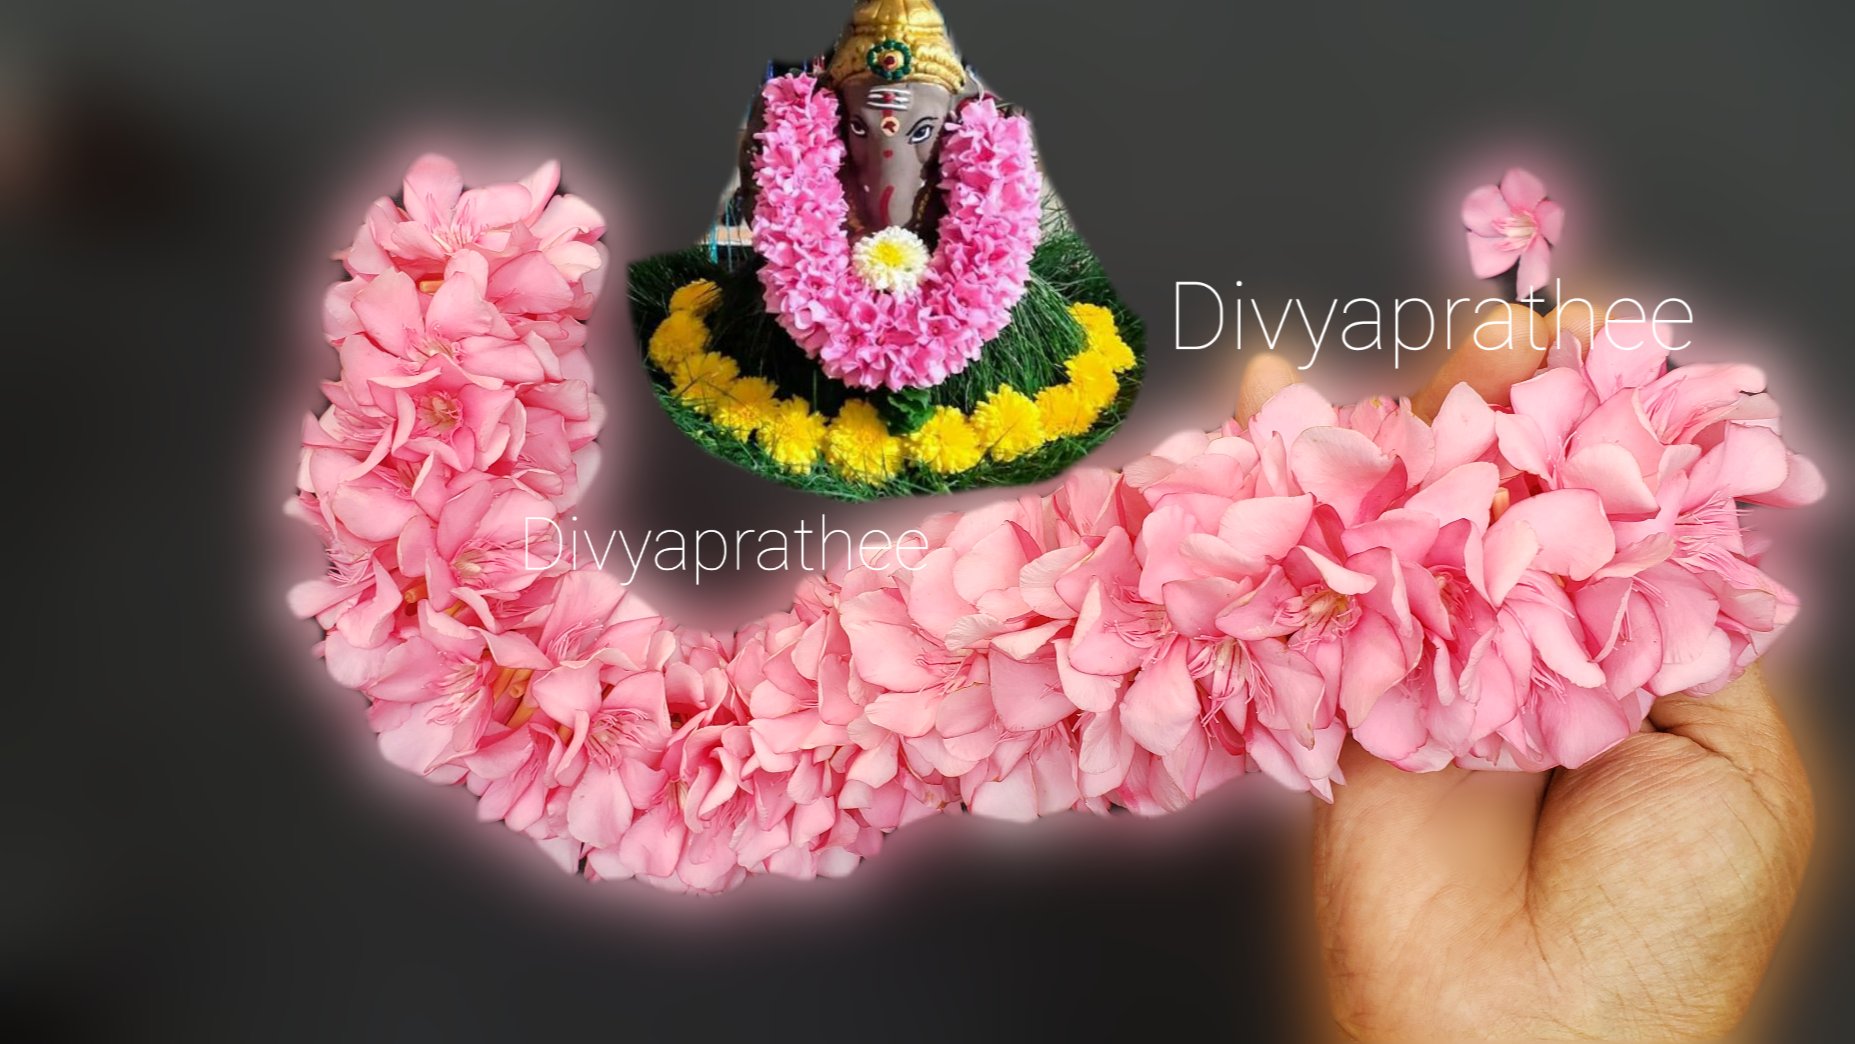 Papiya Paul auf X: „#Flower decoration like hindu God Lord Krishna at the  Winter #FlowerShow, #AHSI #Kolkata http://t.co/L2knem3hM8“ / X